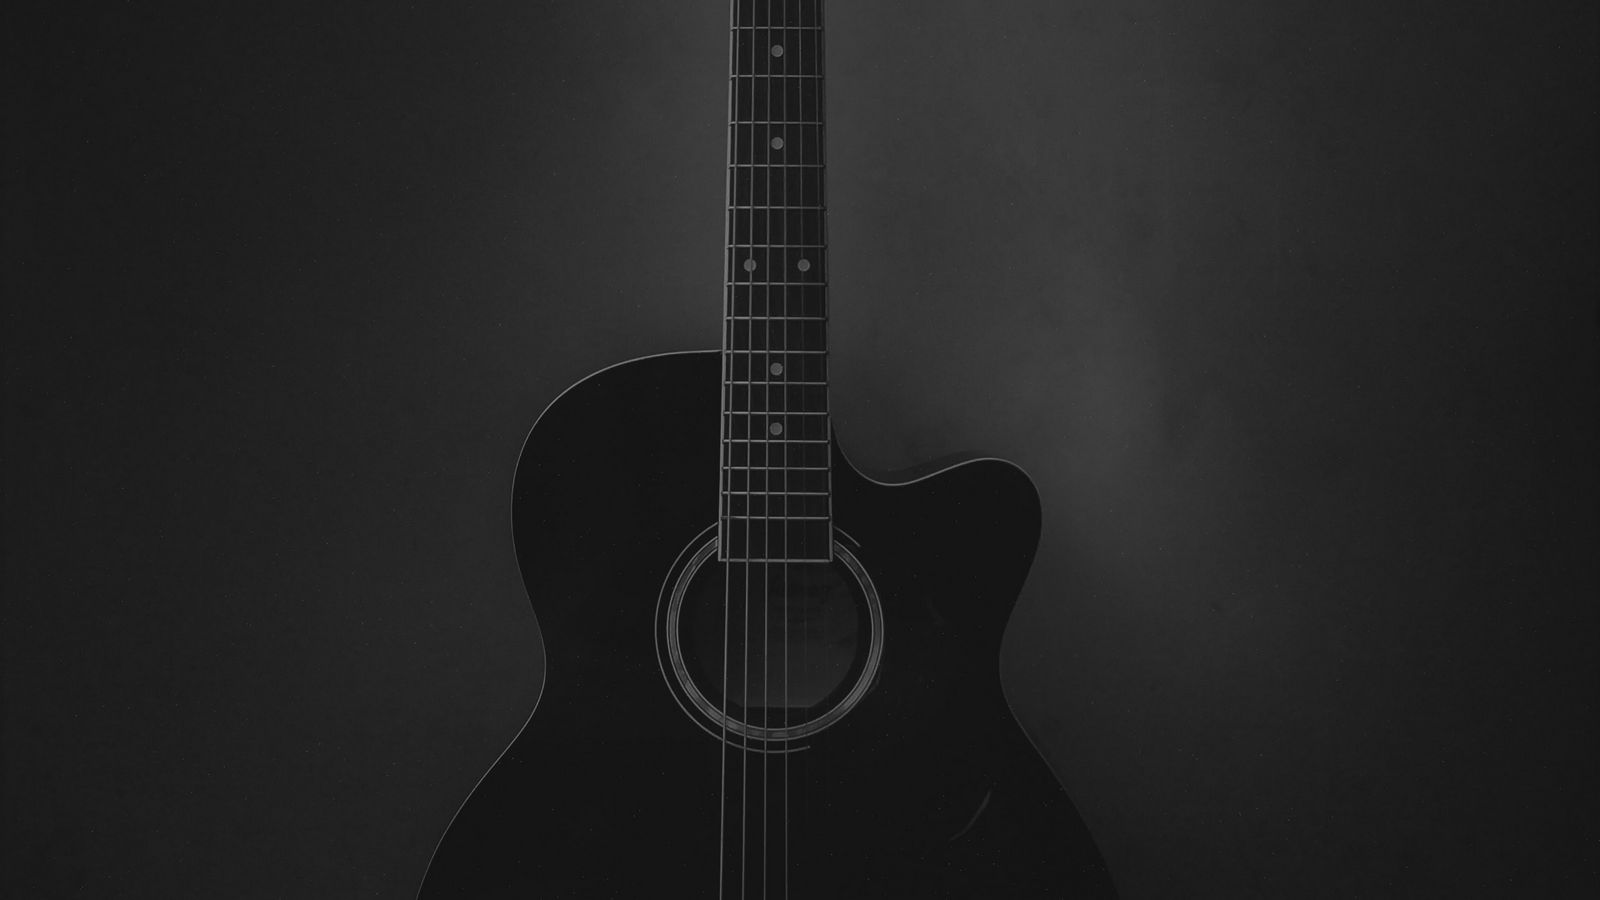 Download wallpaper 1600x900 acoustic guitar, guitar, musical instrument,  black, dark widescreen 16:9 hd background